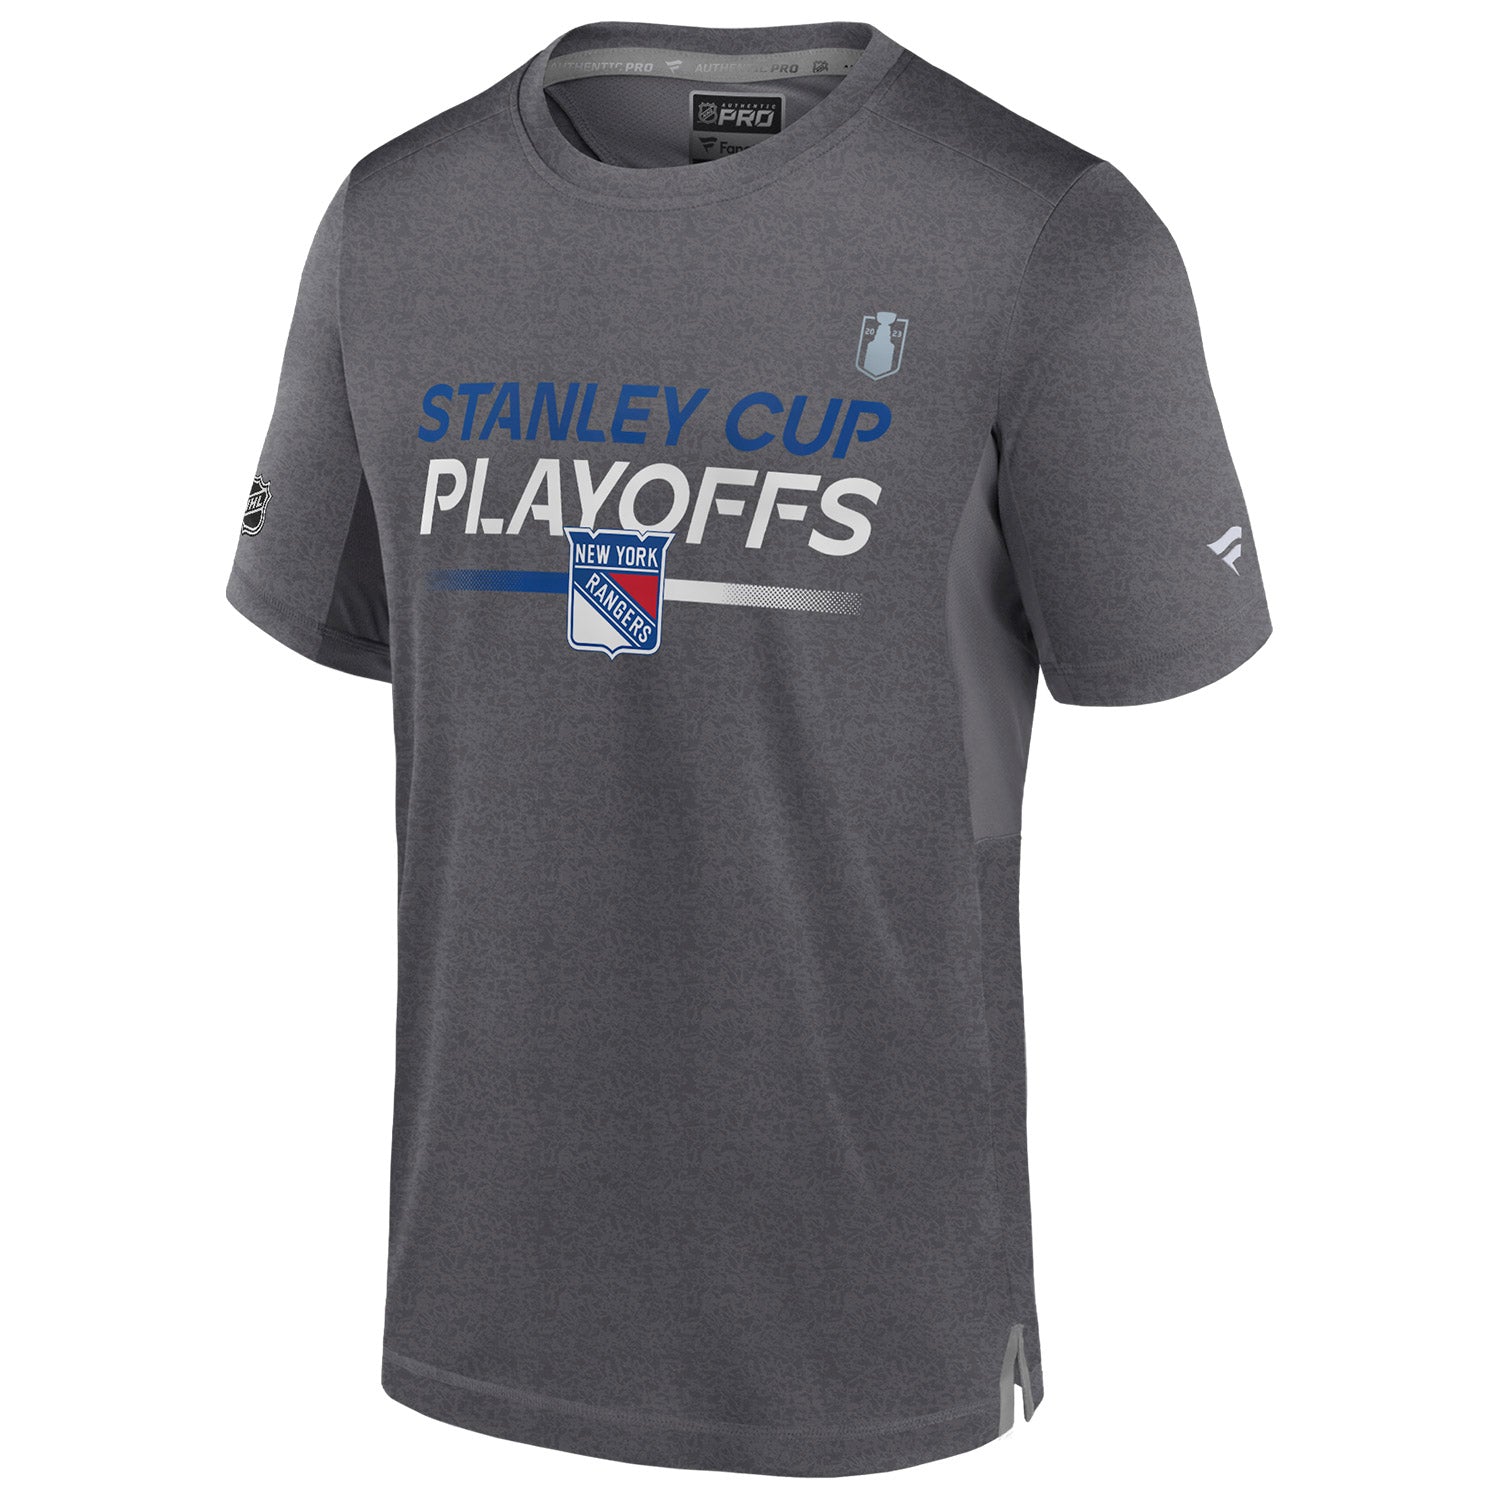 Fanatics Branded Men's Fanatics Branded Royal Texas Rangers 2023 MLB Spring  Training Diamond - T-Shirt